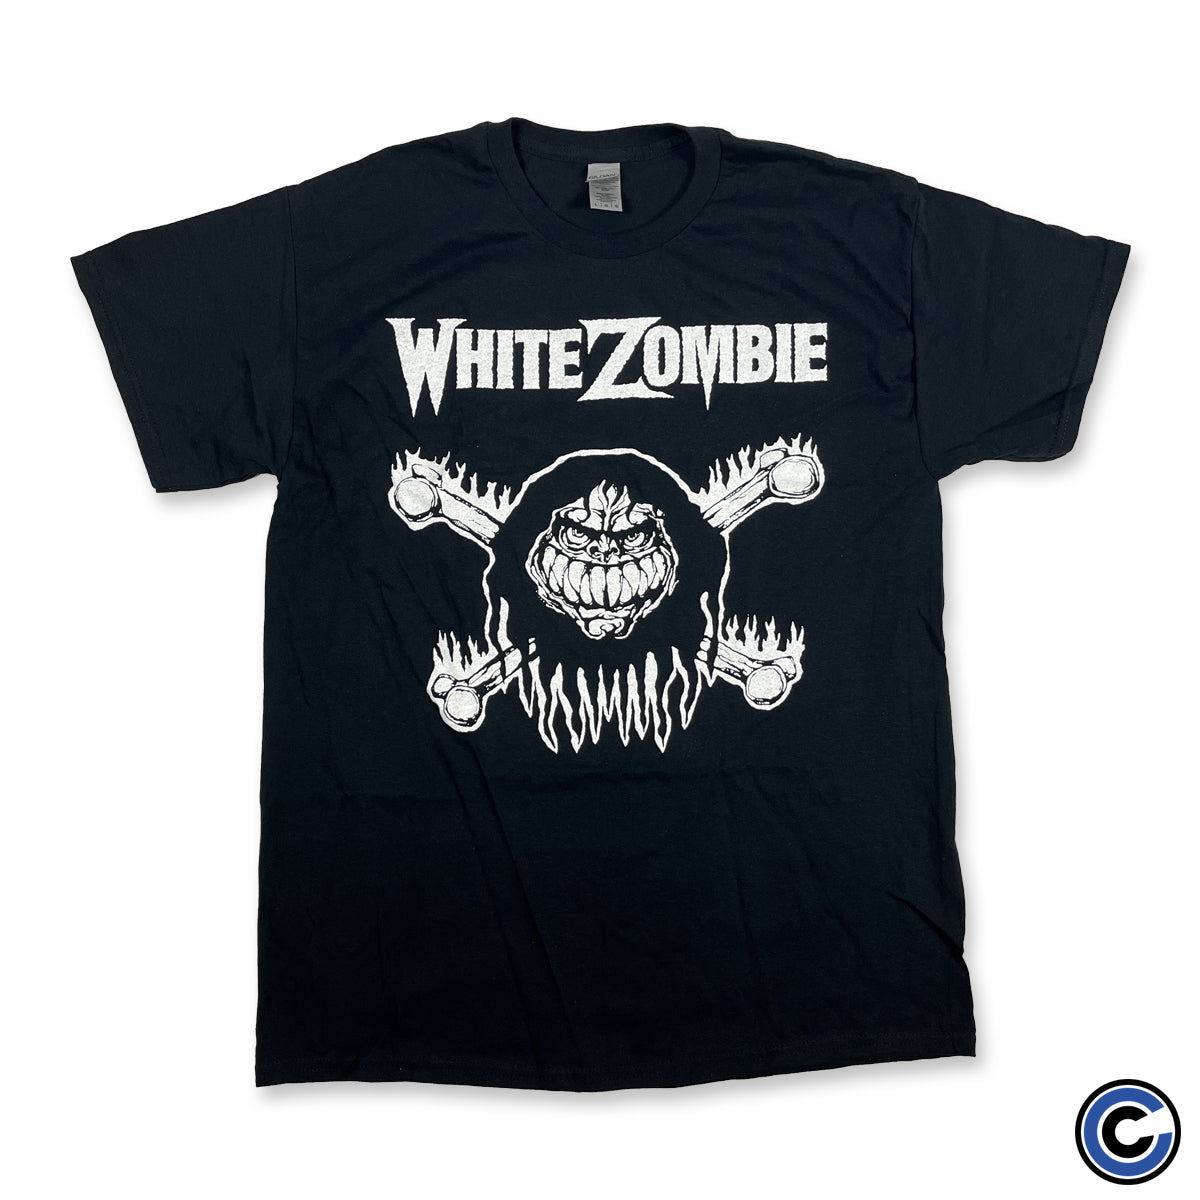 White Zombie "Make Them Die" Shirt